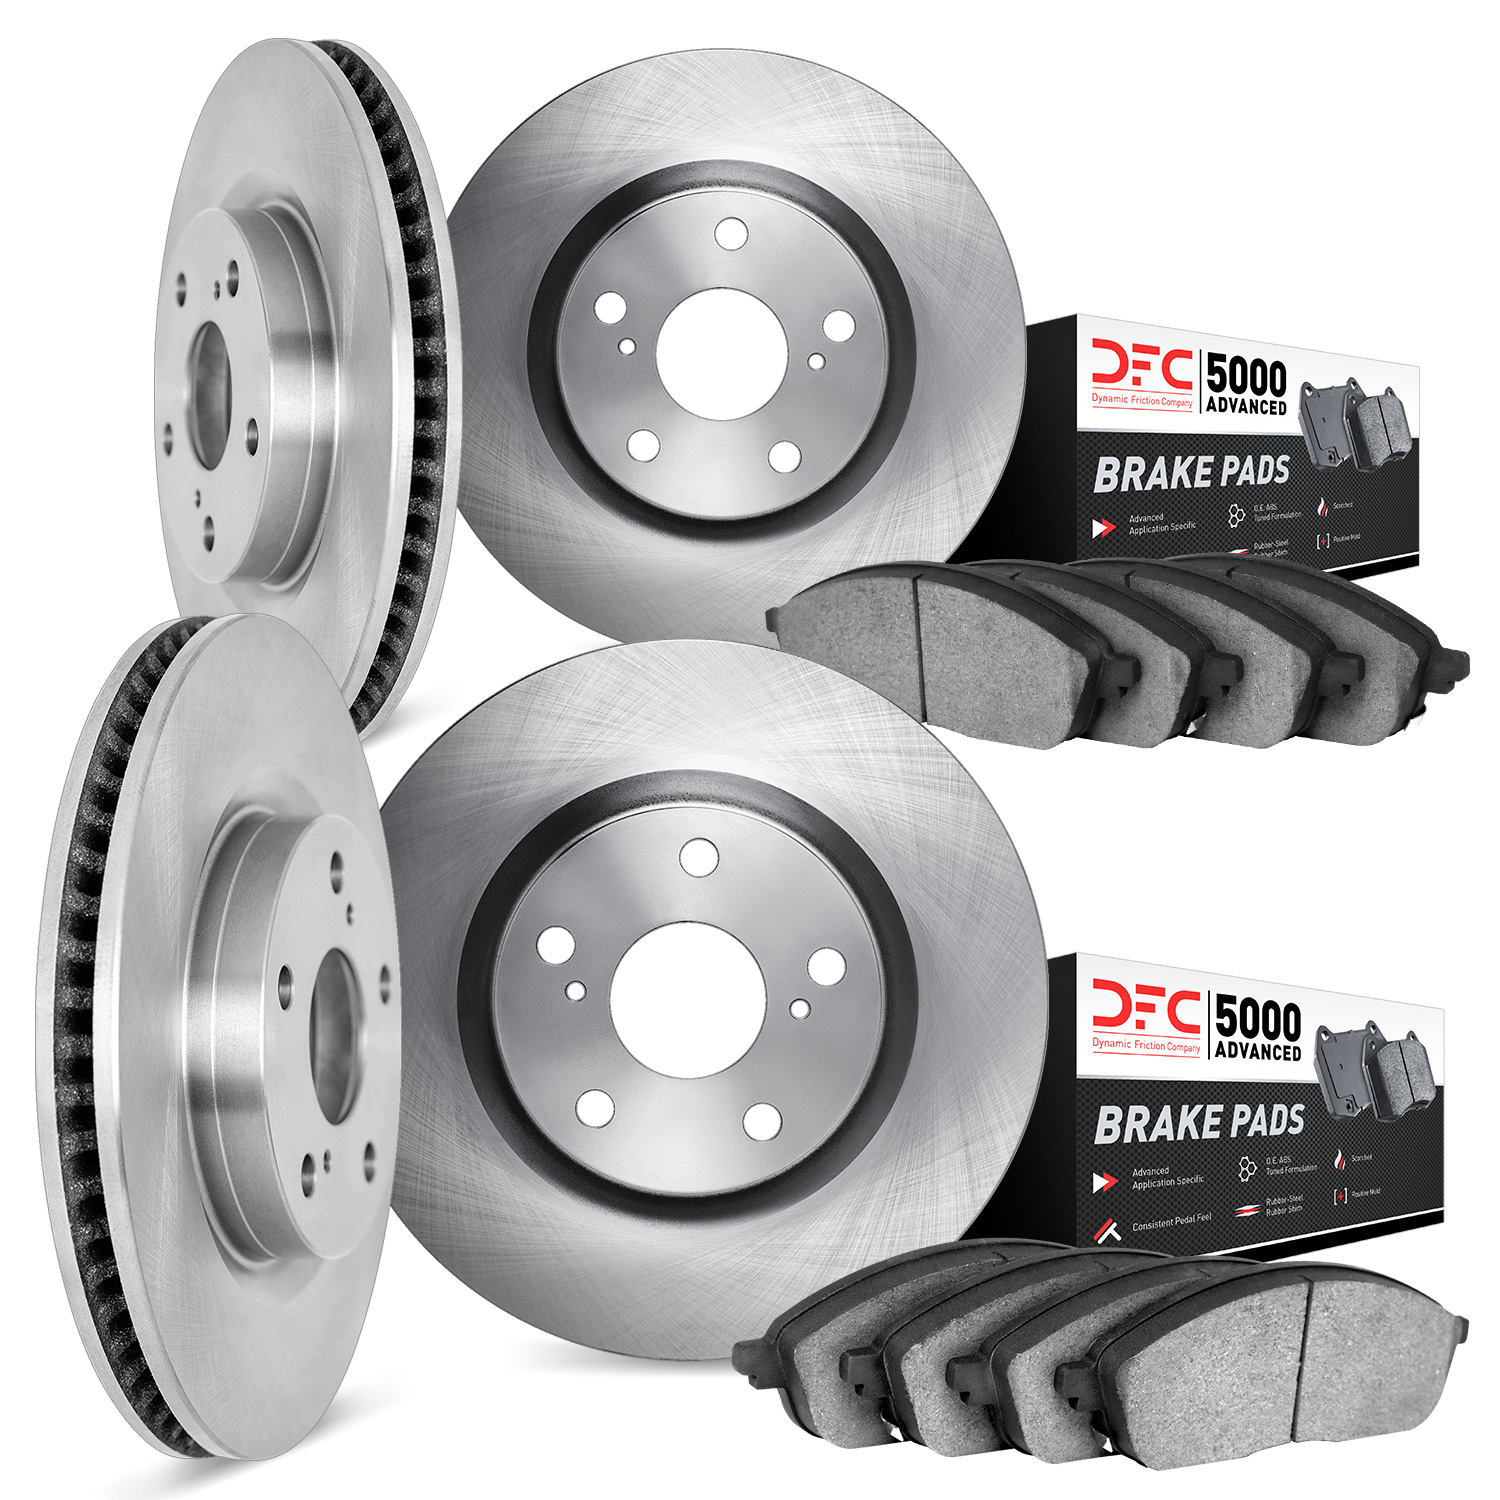 6504-68010 Brake Rotors w/5000 Advanced Brake Pads Kit, Fits Select Infiniti/Nissan, Position: Front and Rear